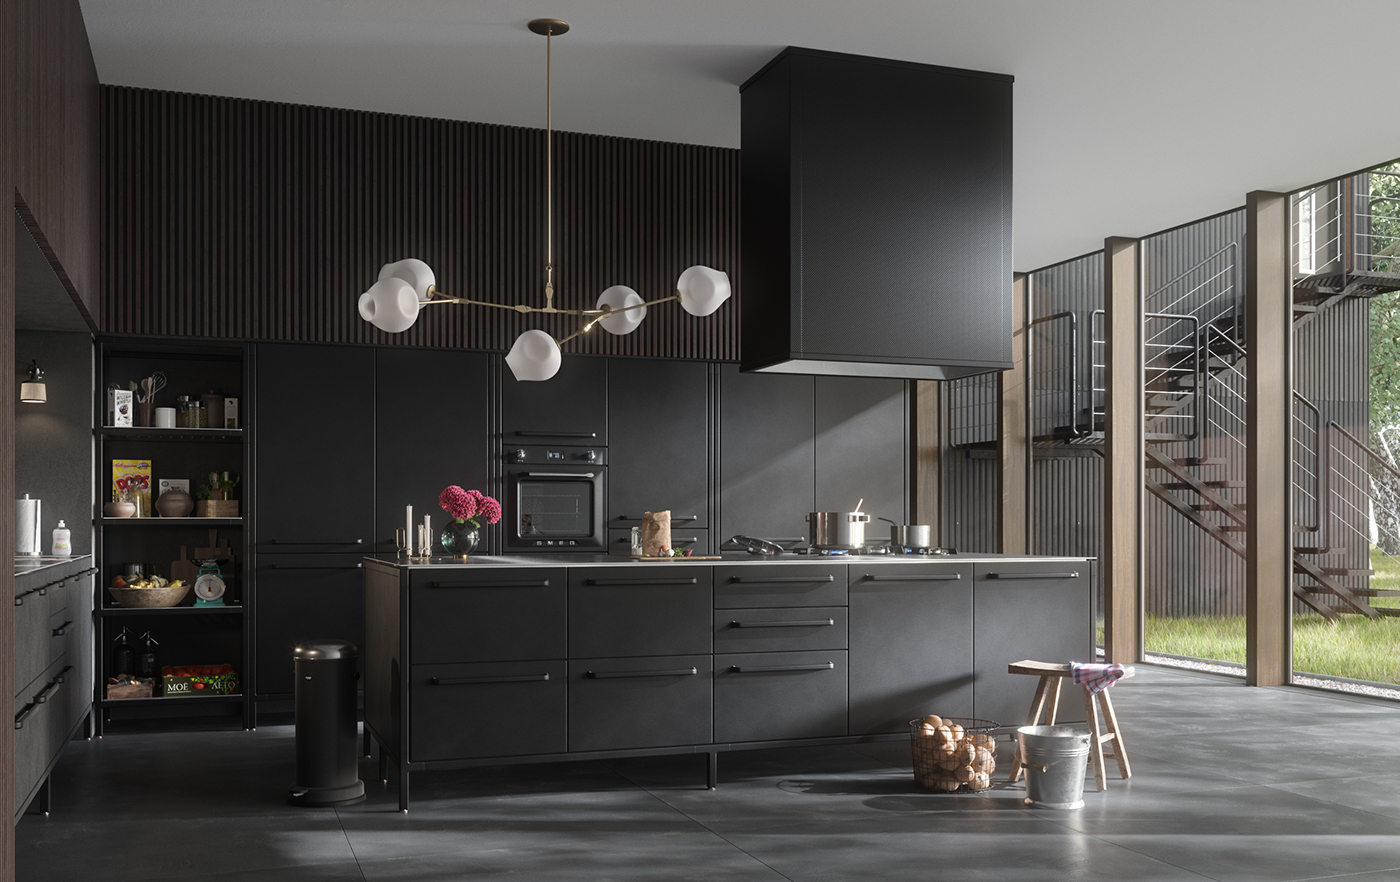 vipp kitchen black corona Render modern Interior architecture